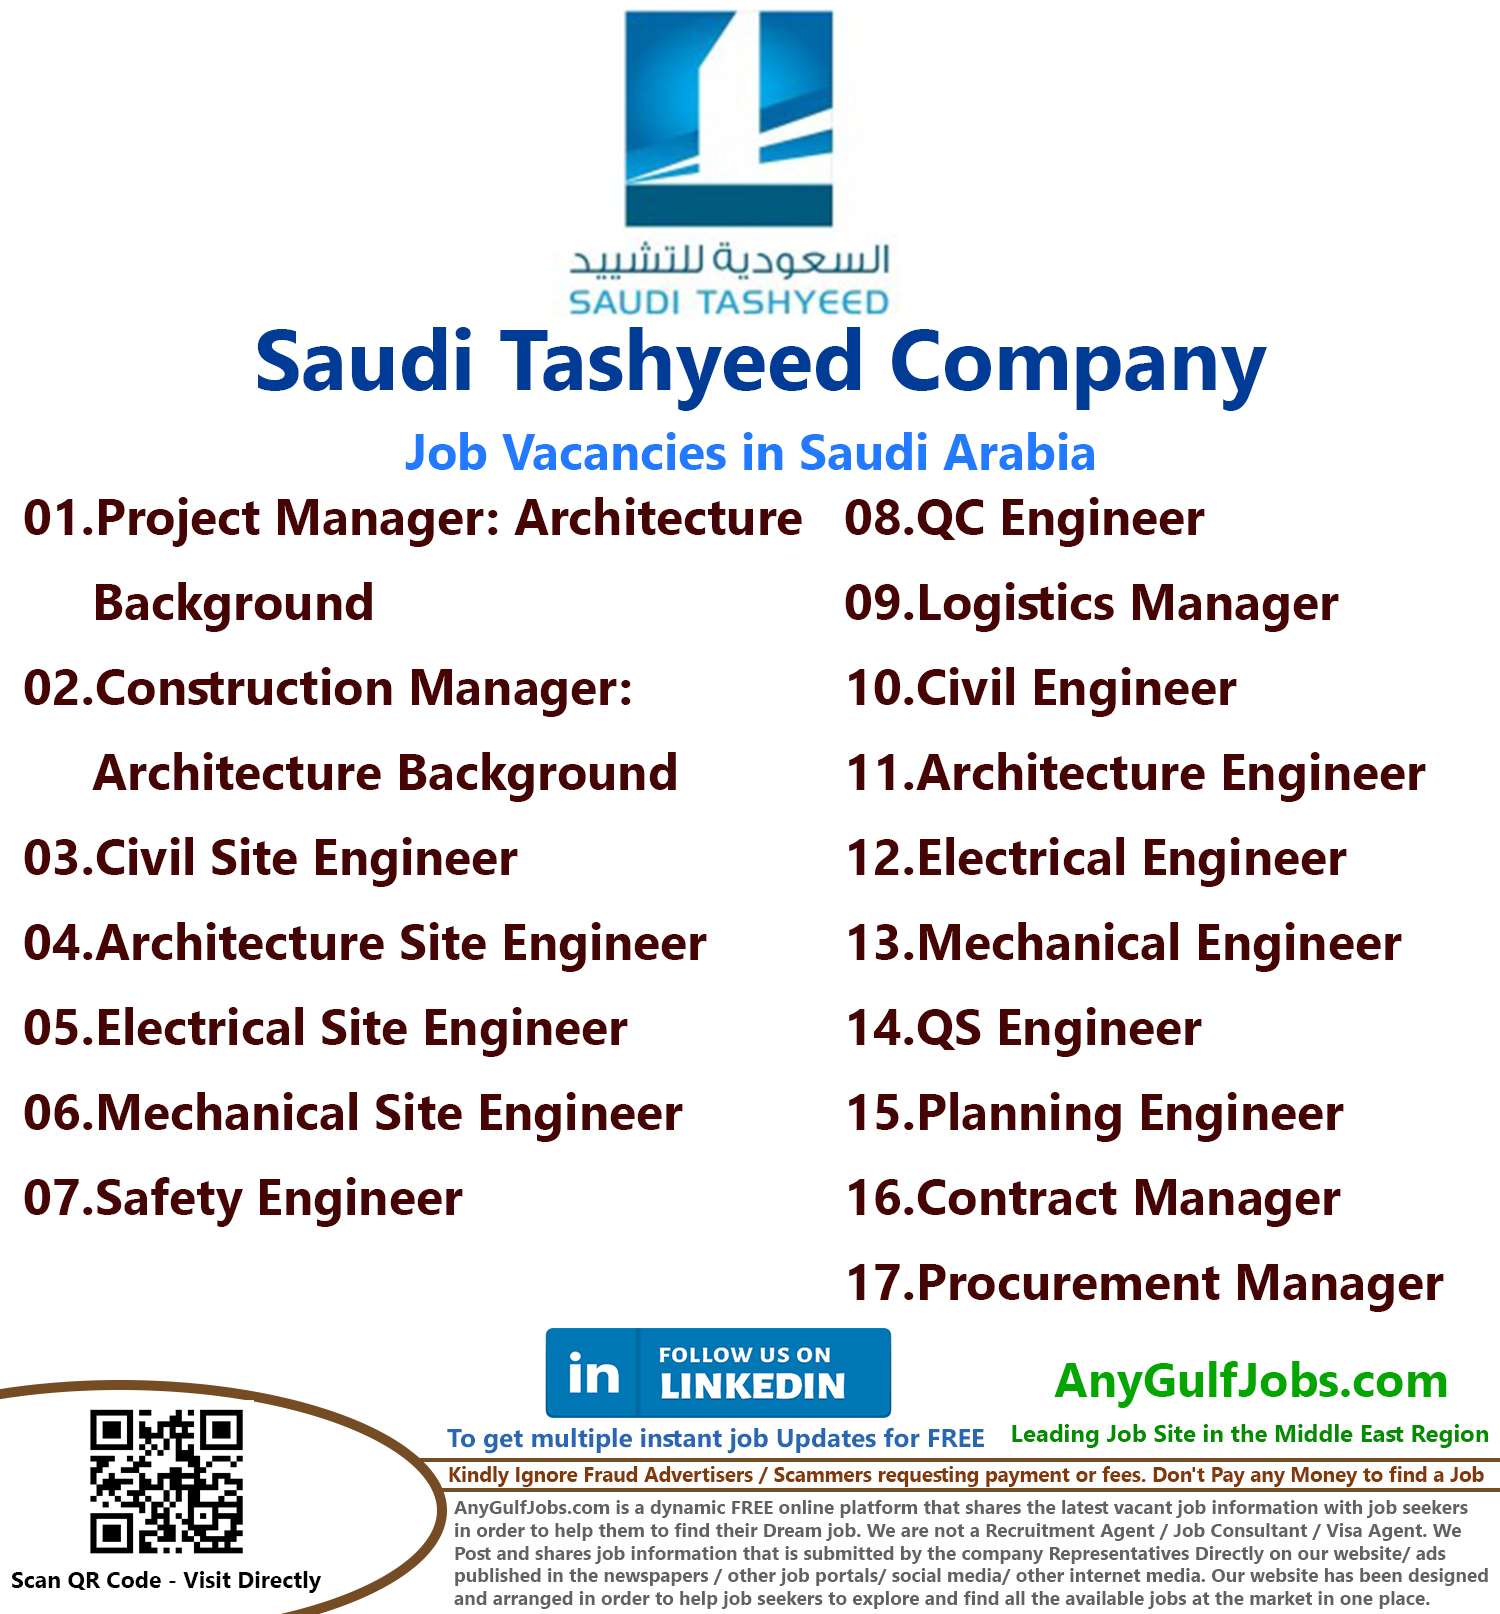 List of Saudi Tashyeed Company Jobs - Saudi Arabia